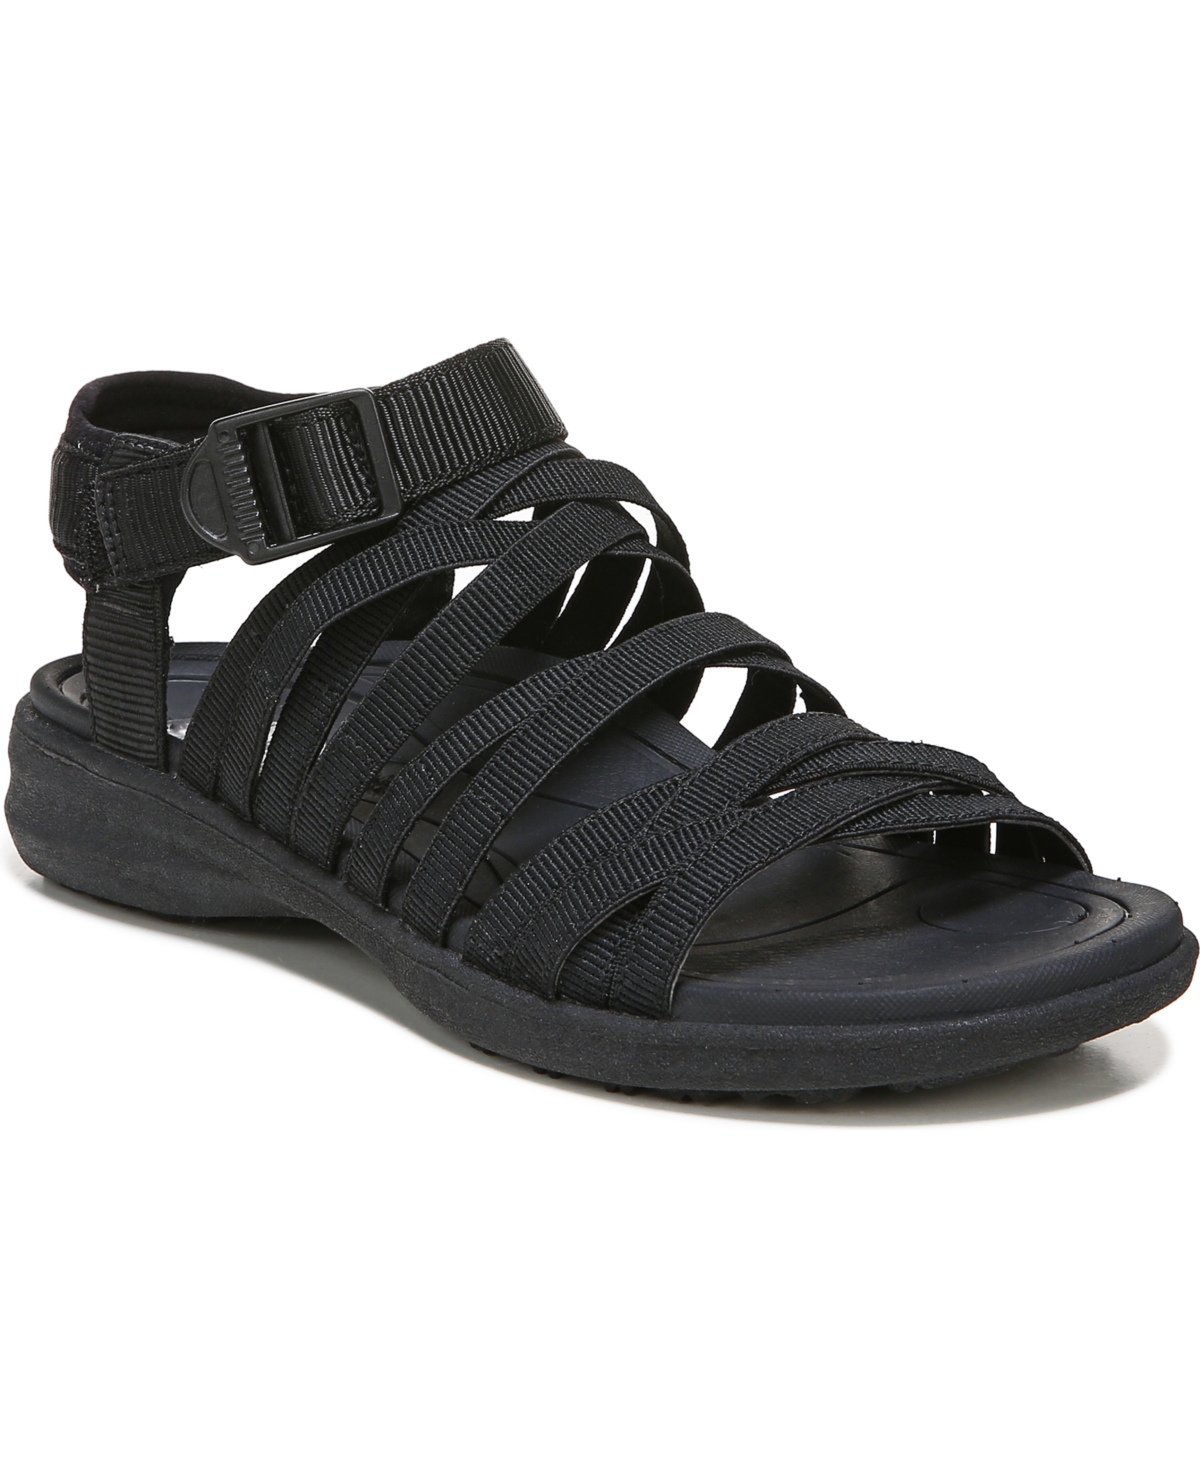 Women's Tegua Strappy Sandals - Black Fabric